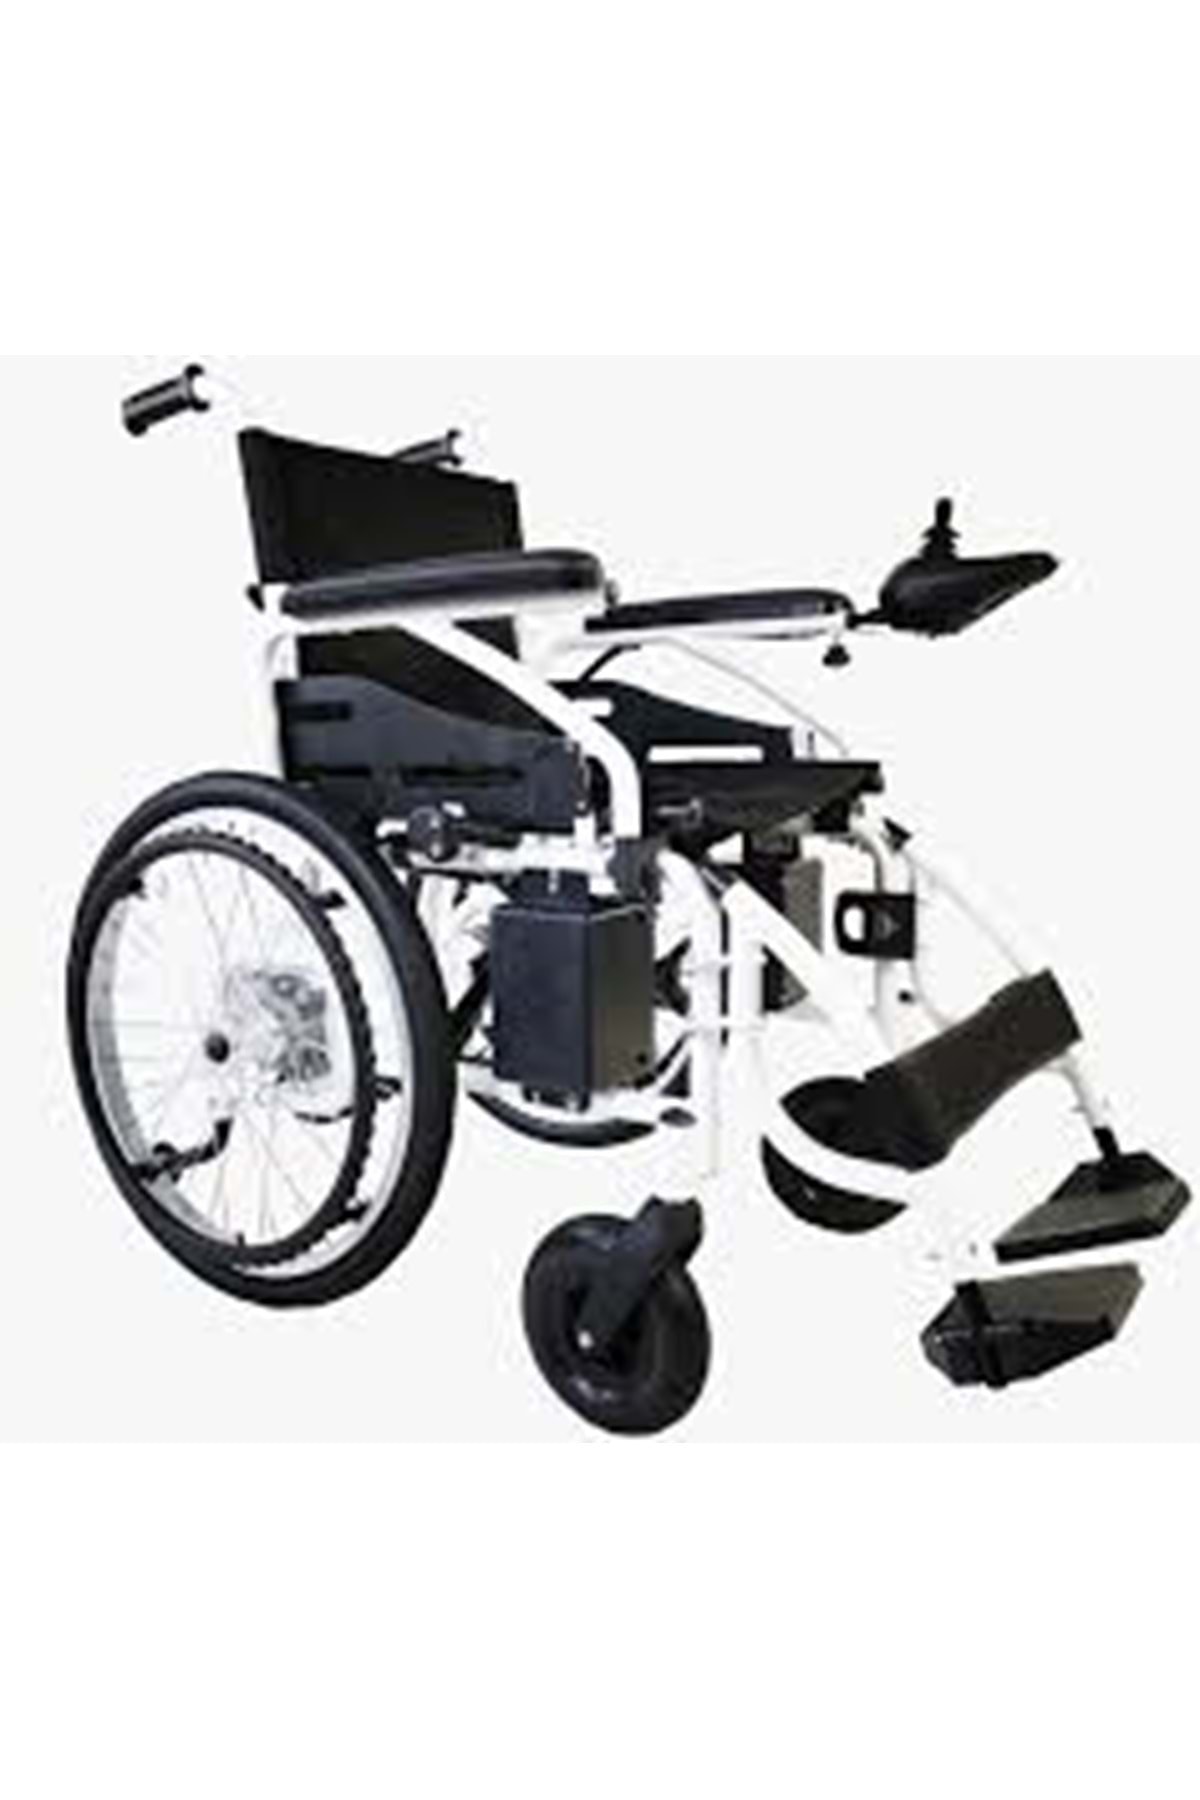 POYLİN Akülü Tekerlekli Sandalye P200-e